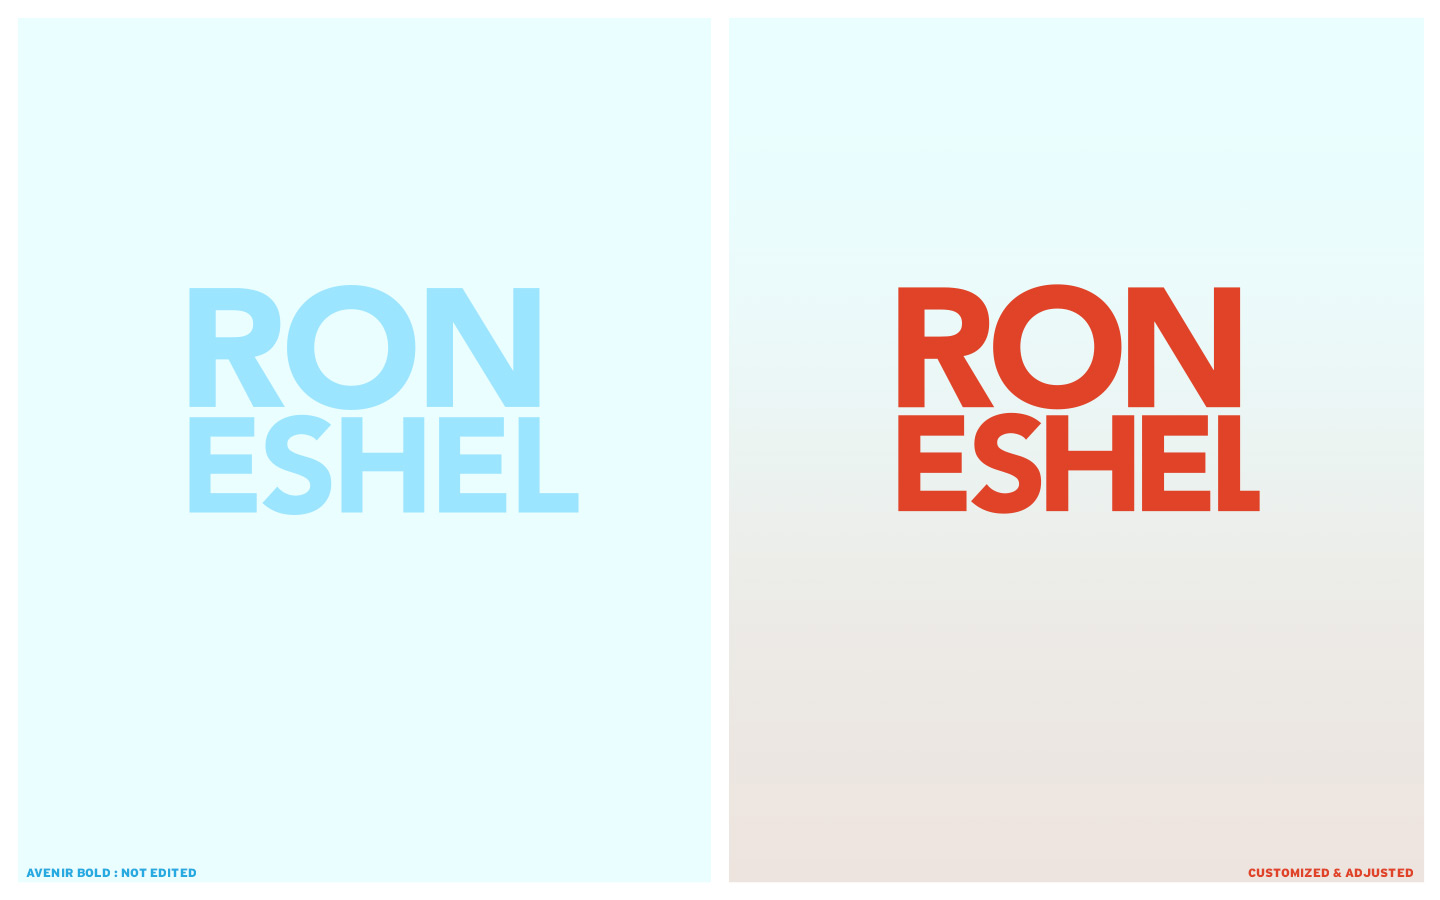 roneshel logo